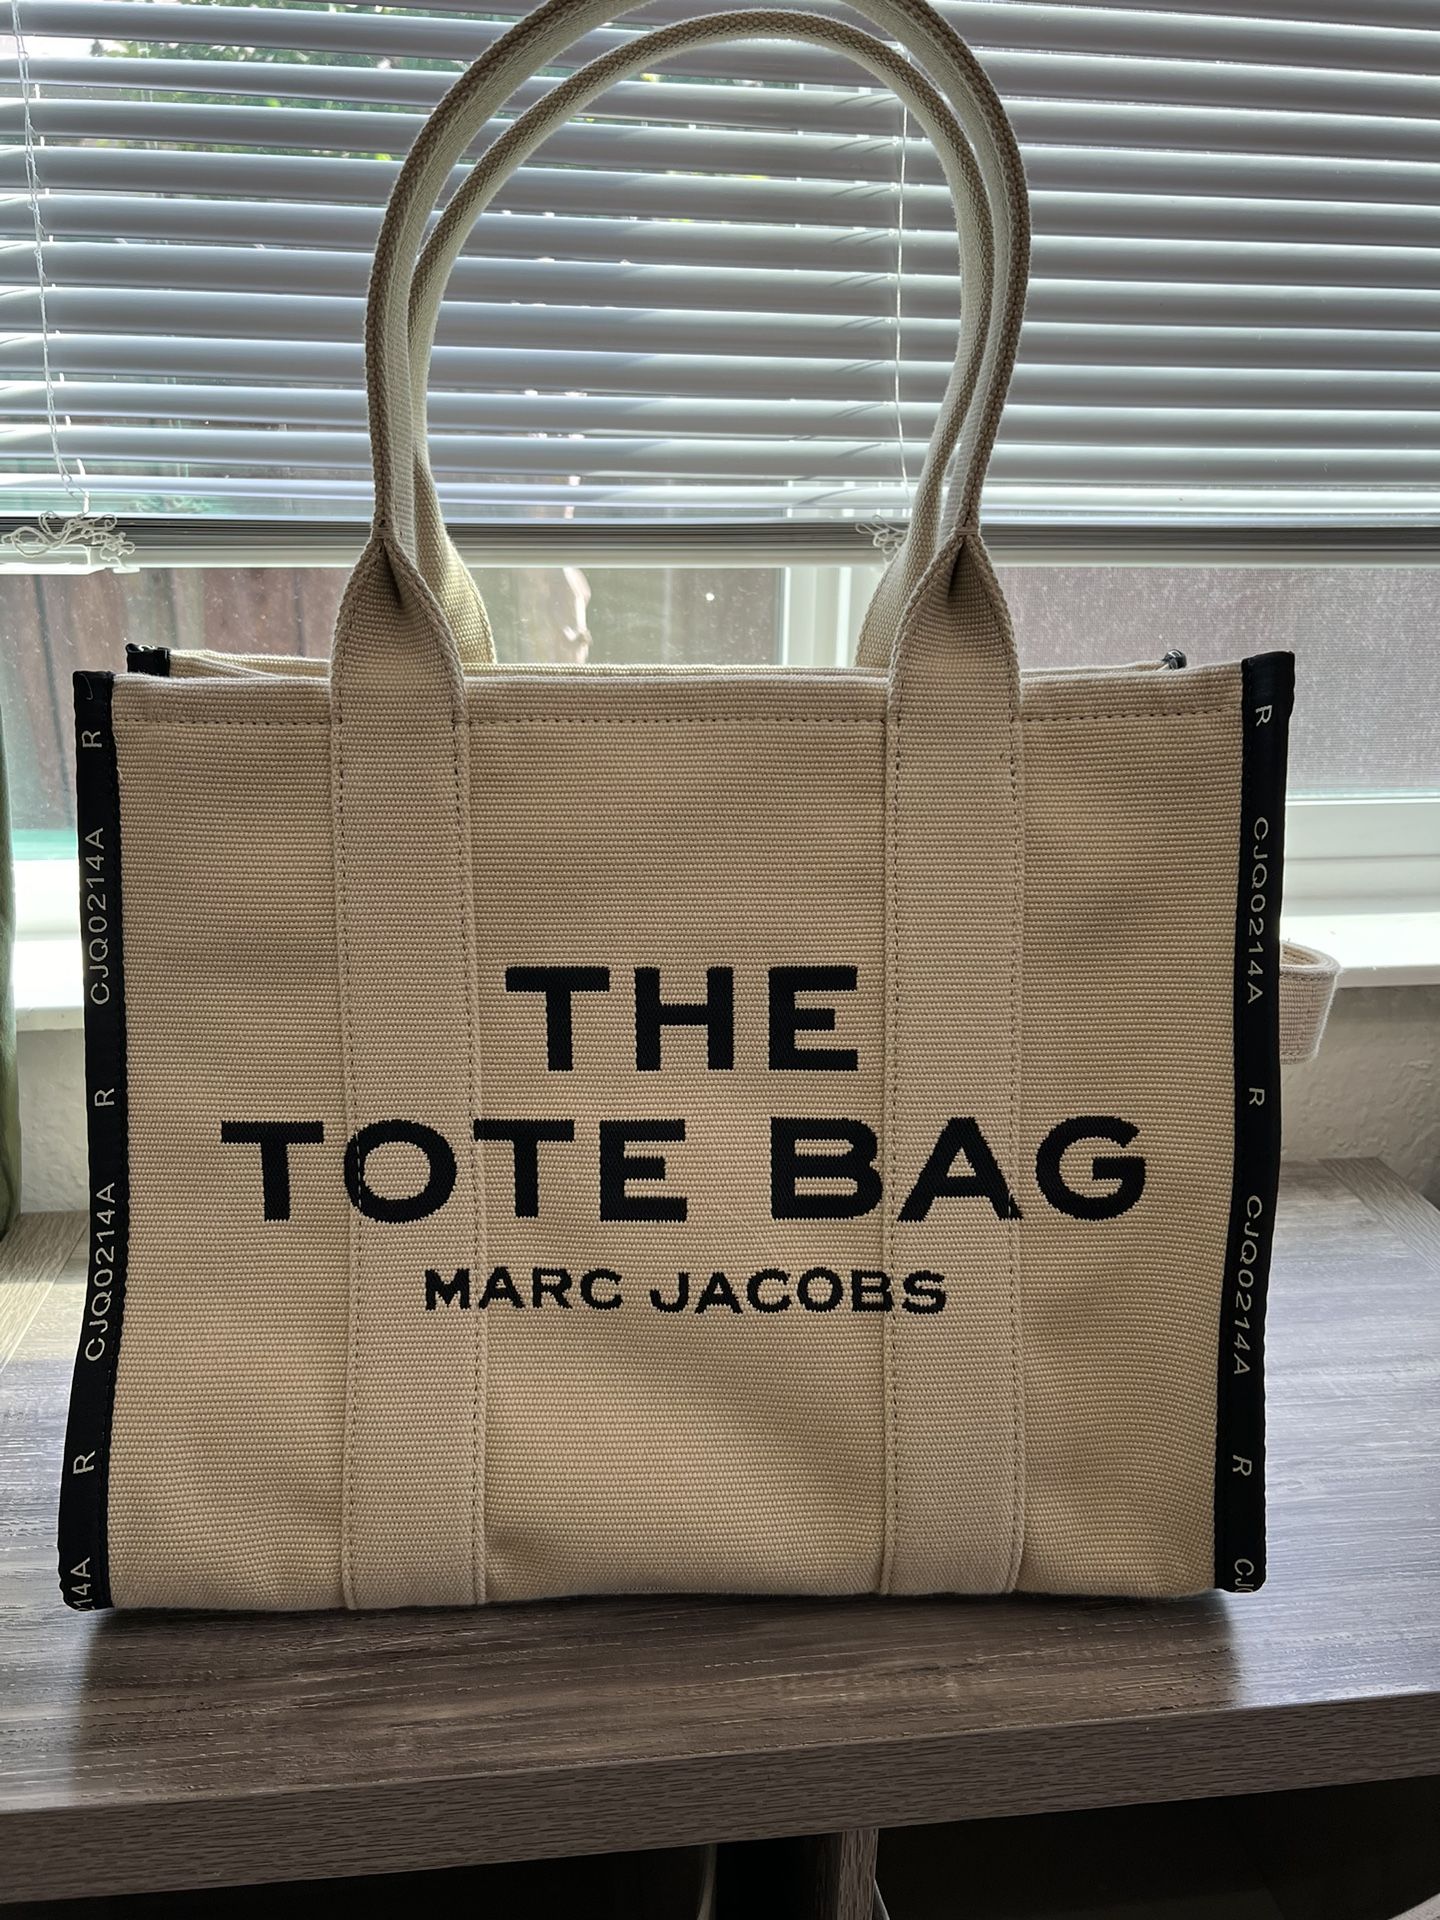 Authentic Marc Jacob’s Tote Bag